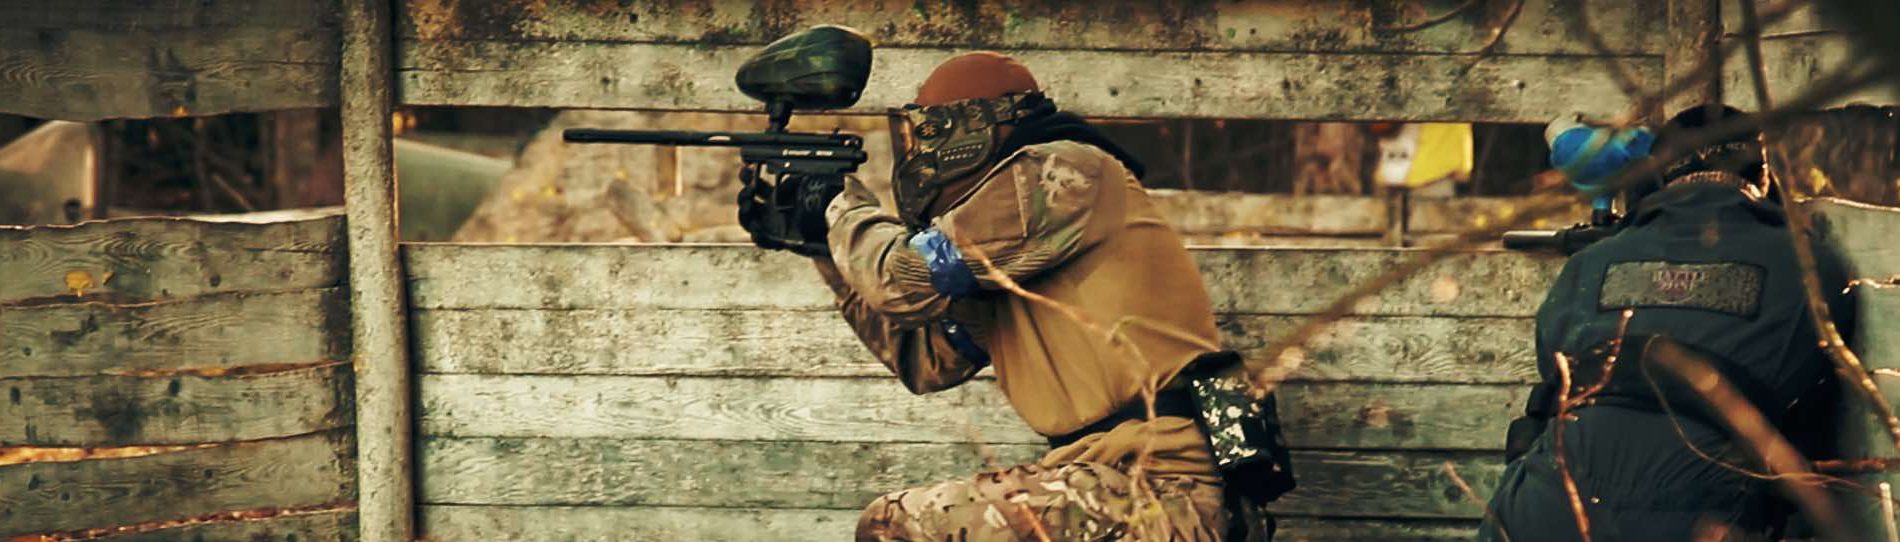 buck shooting paintball gun